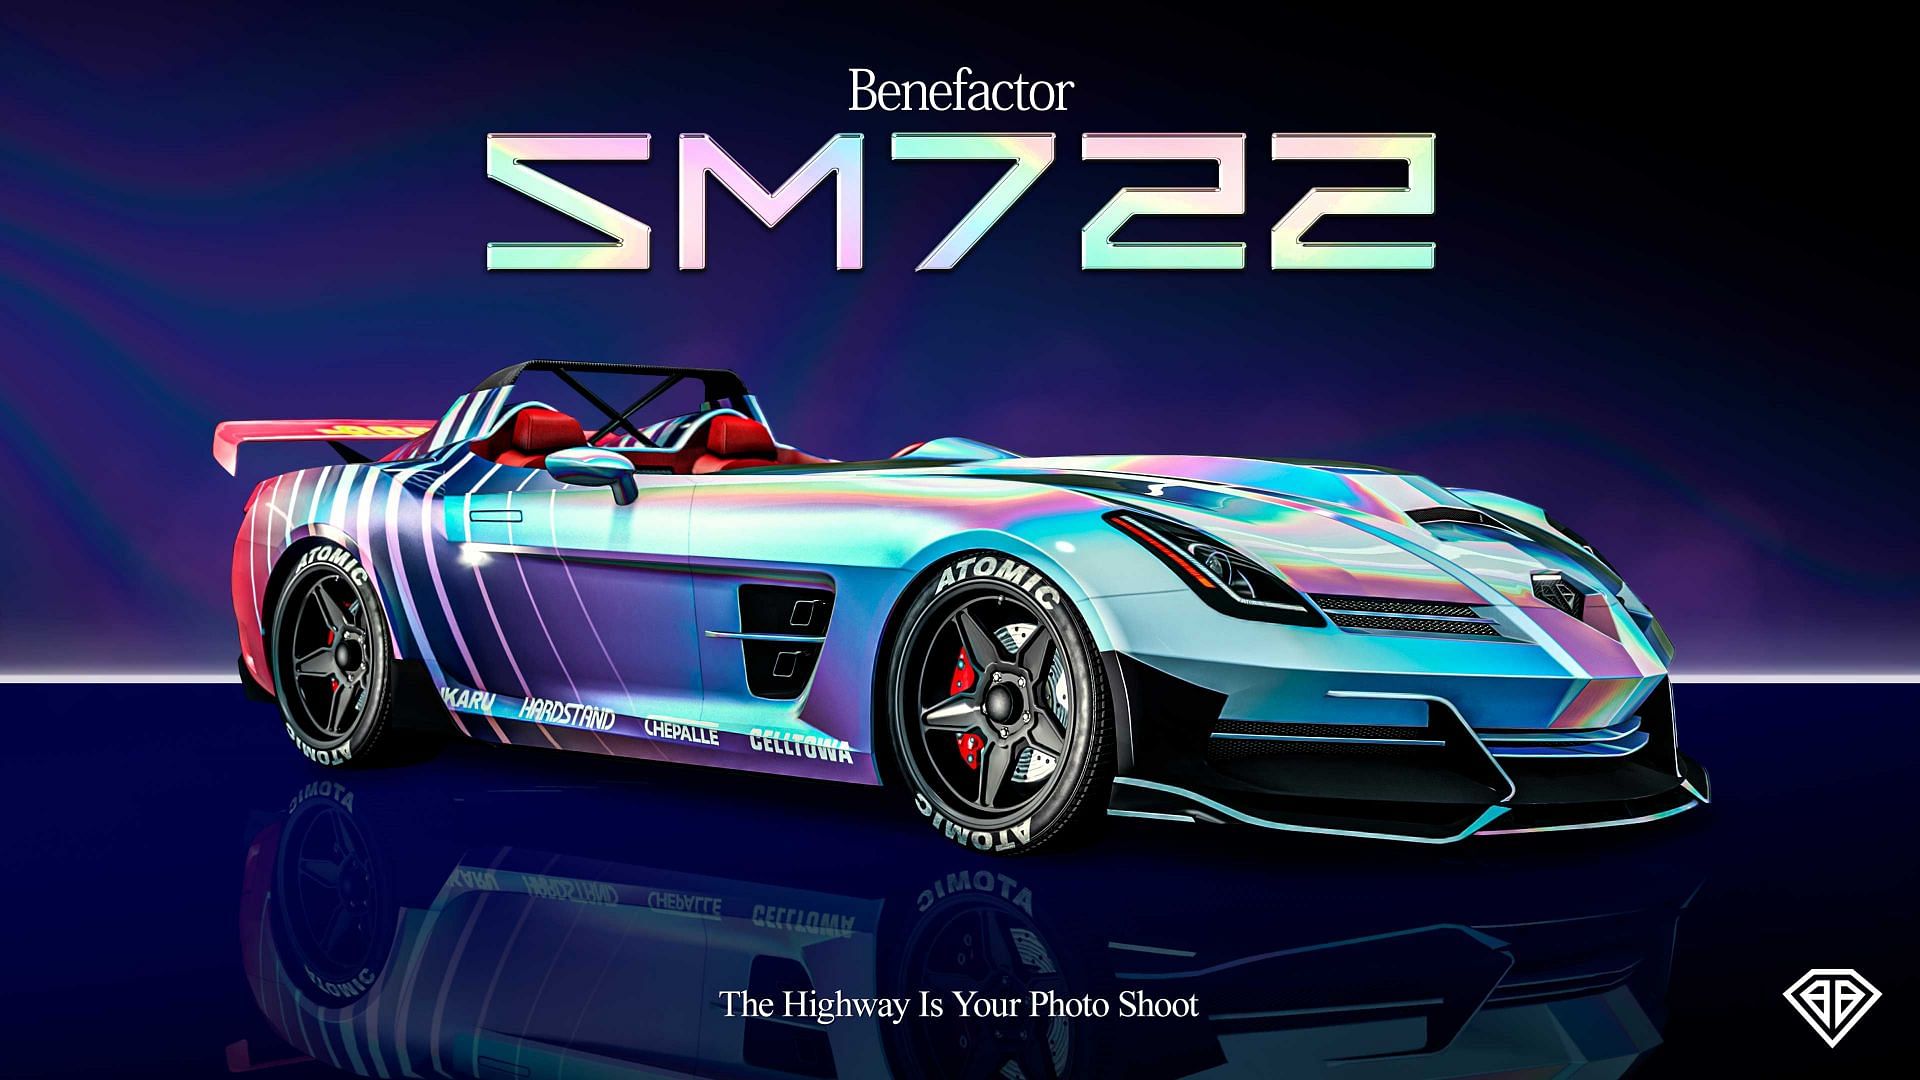 Official SM722 poster (Image via Rockstar Games)